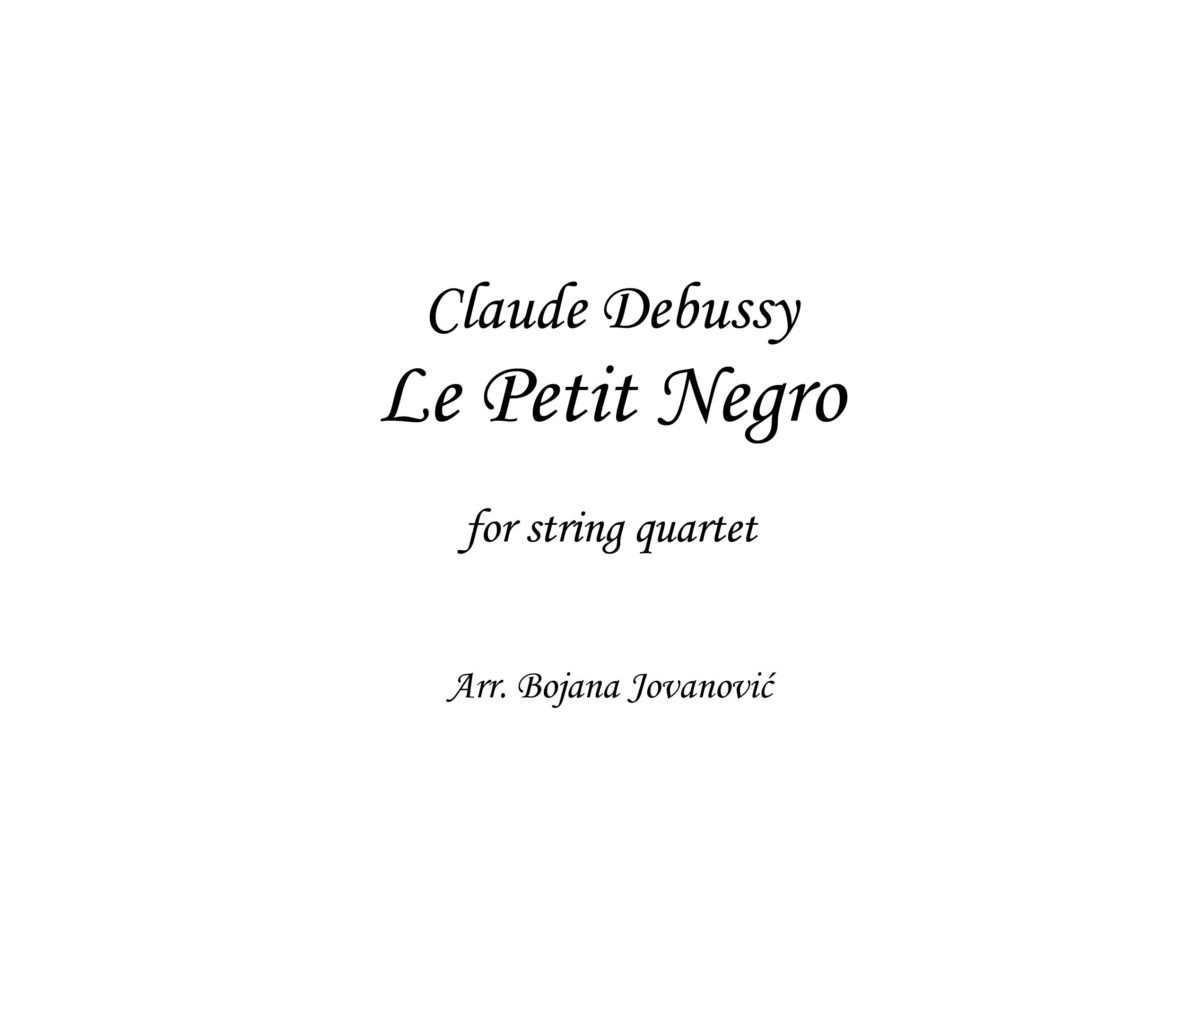 Le Petit Negro (Claude Debussy) - Sheet Music